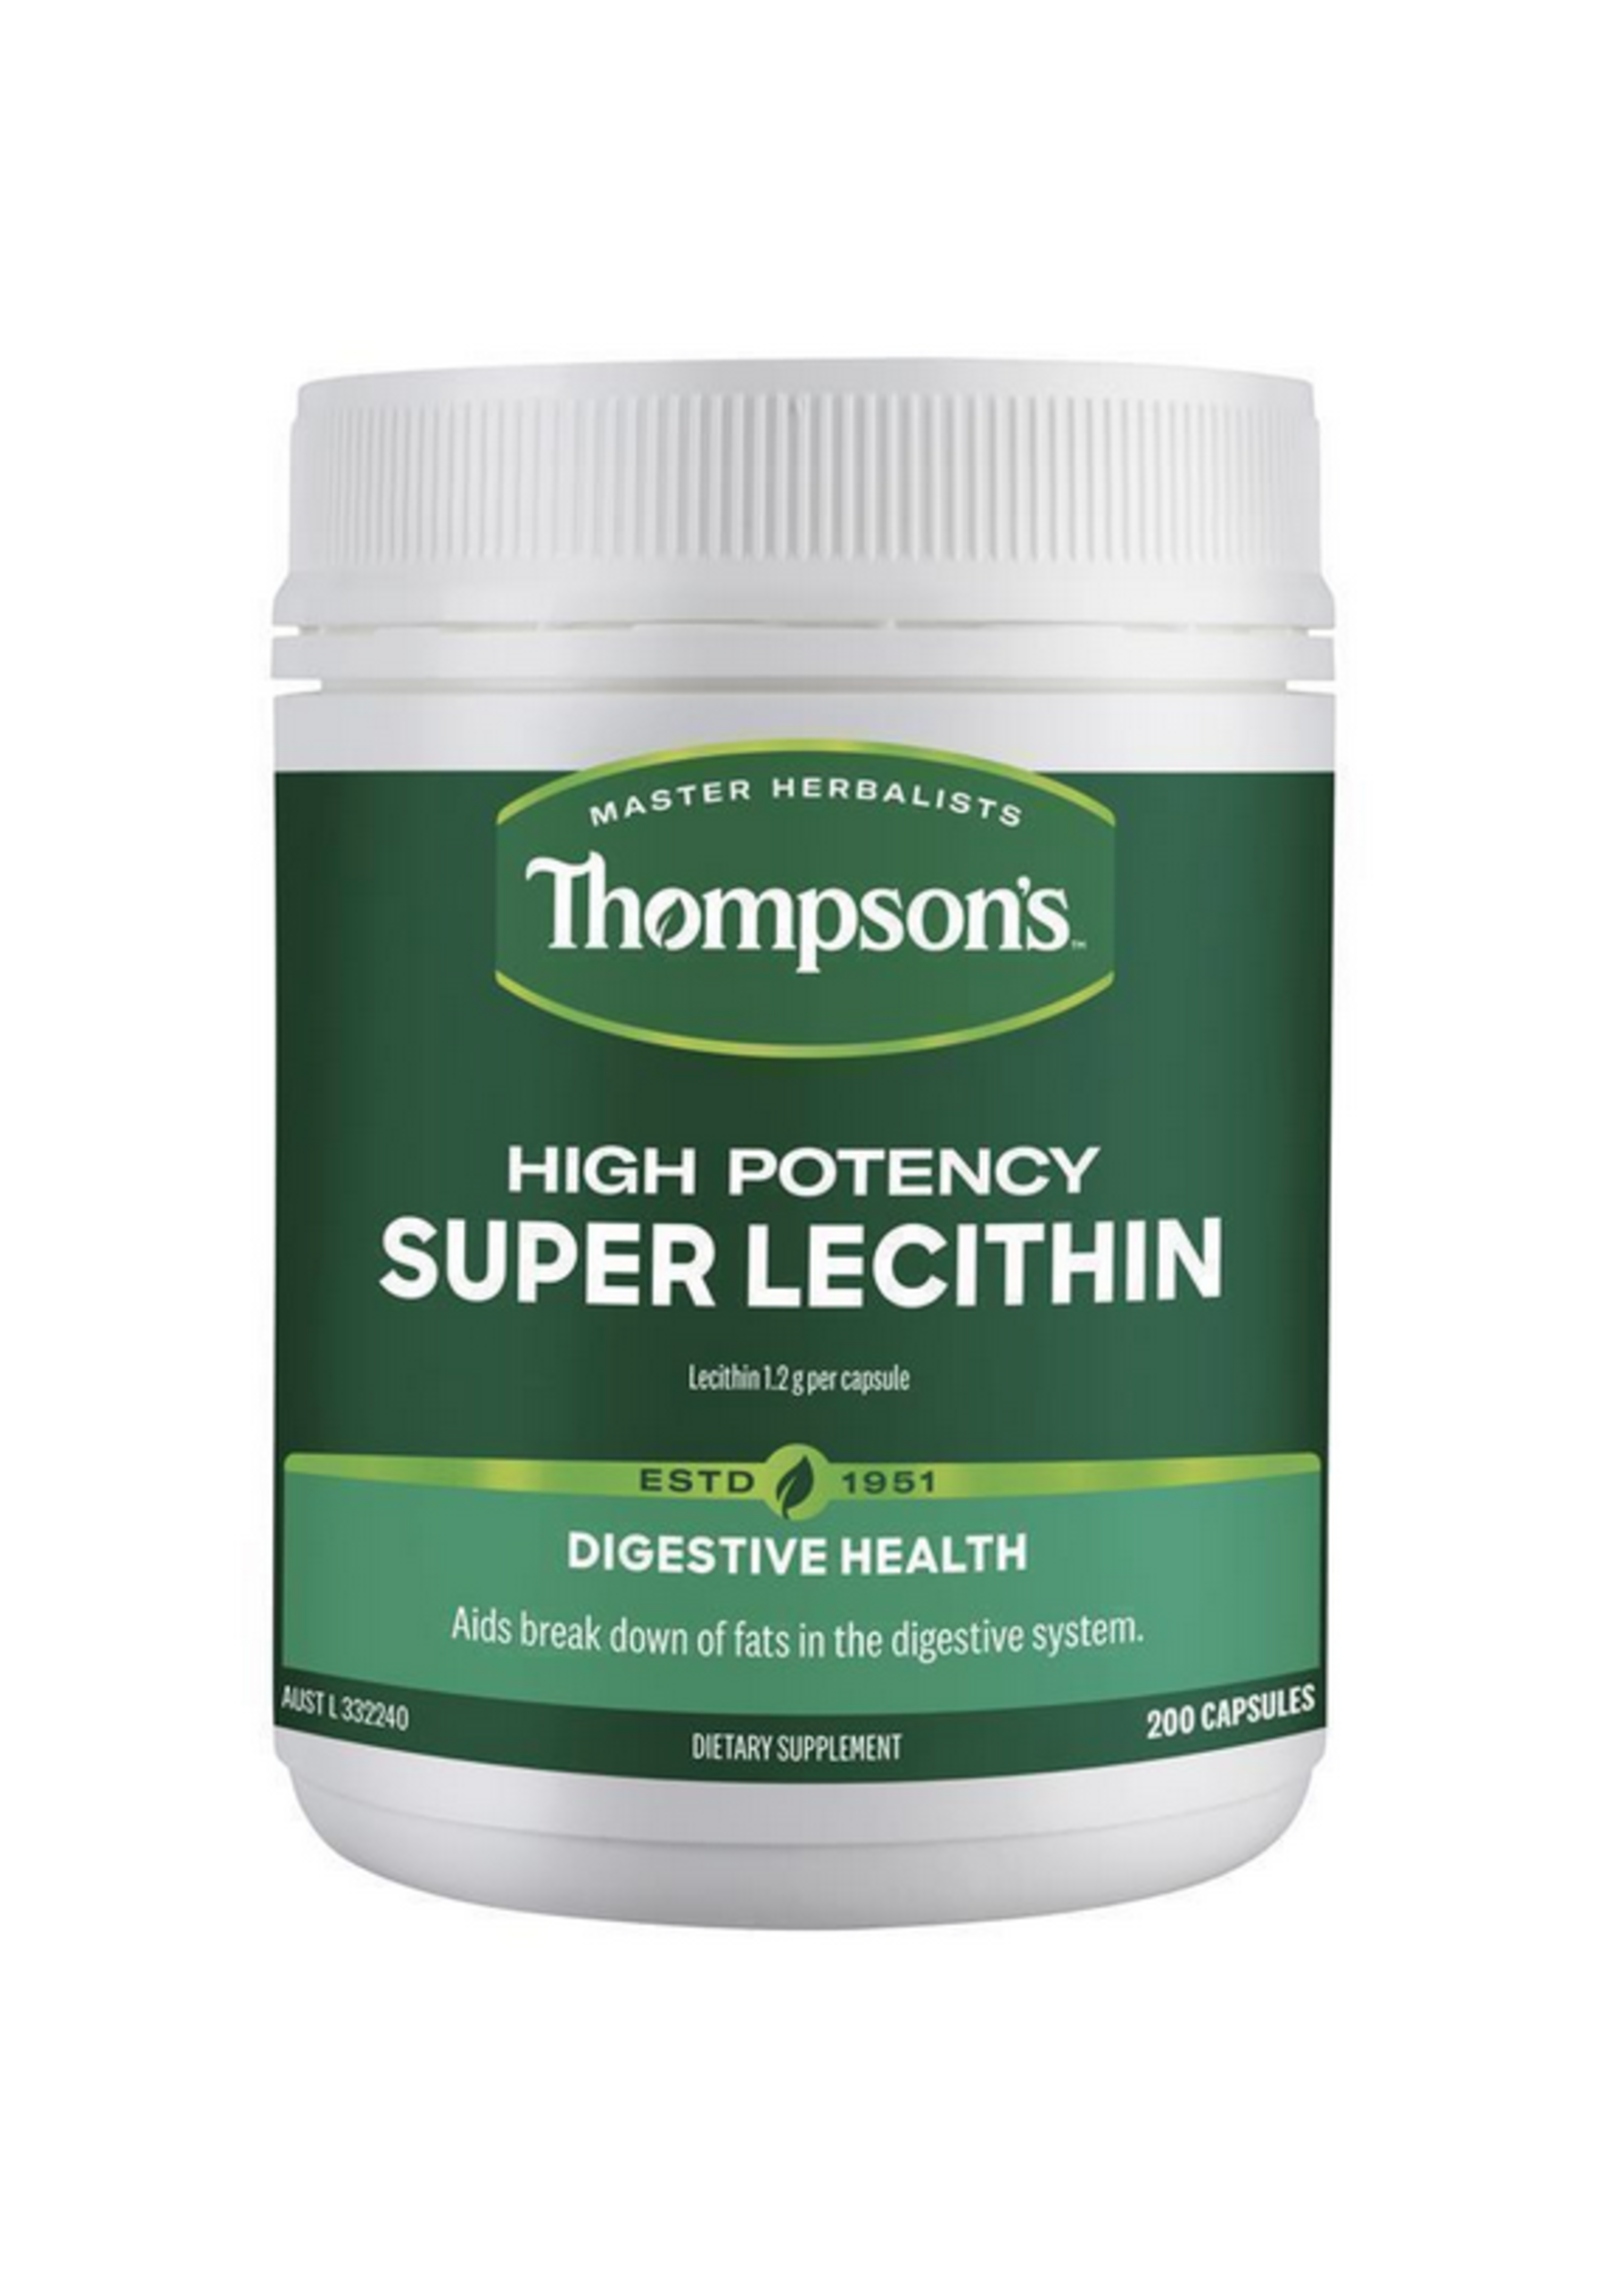 Thompson's Thompsons High Potency Super Lecithin 200 CAPS